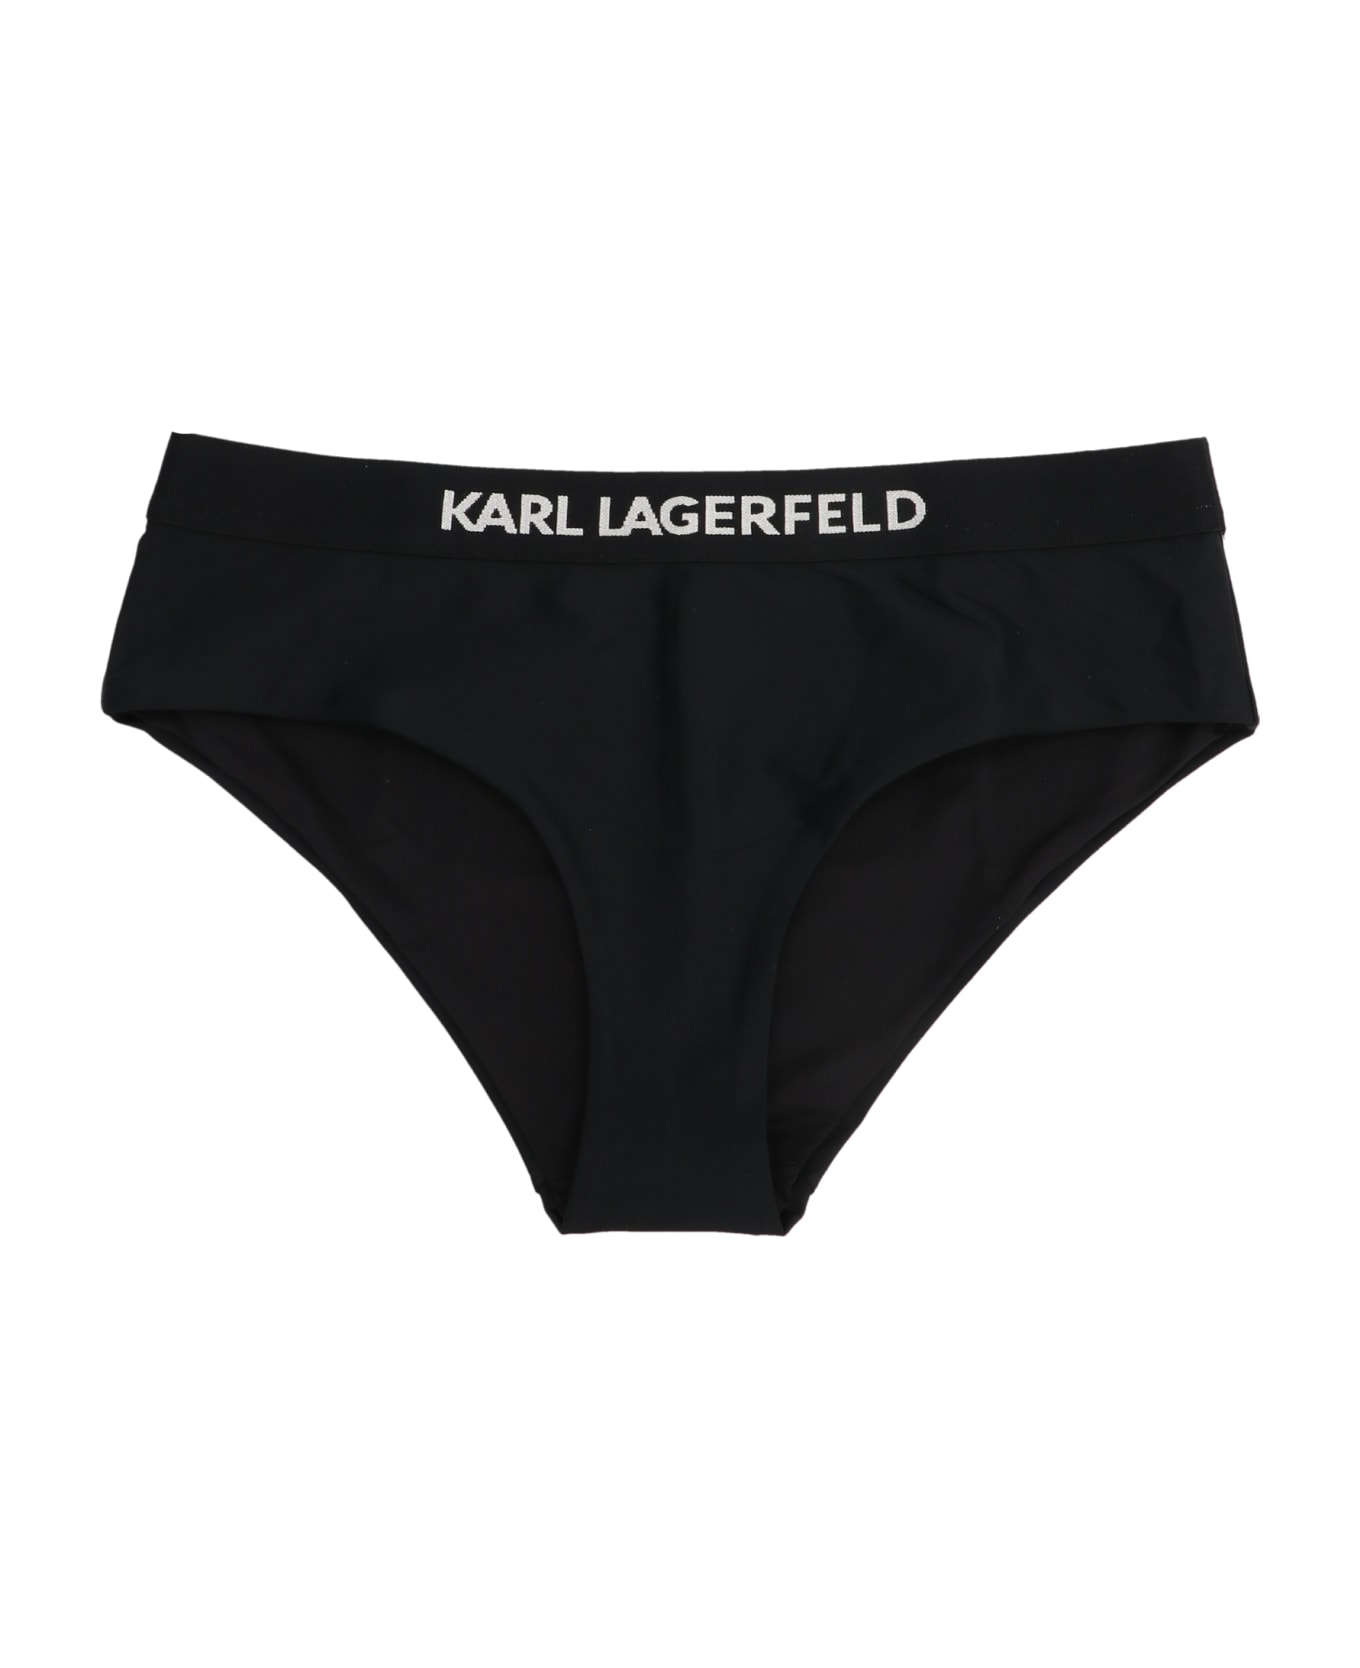 Karl Lagerfeld 'karl' Logo Bikini Bottom - Black  